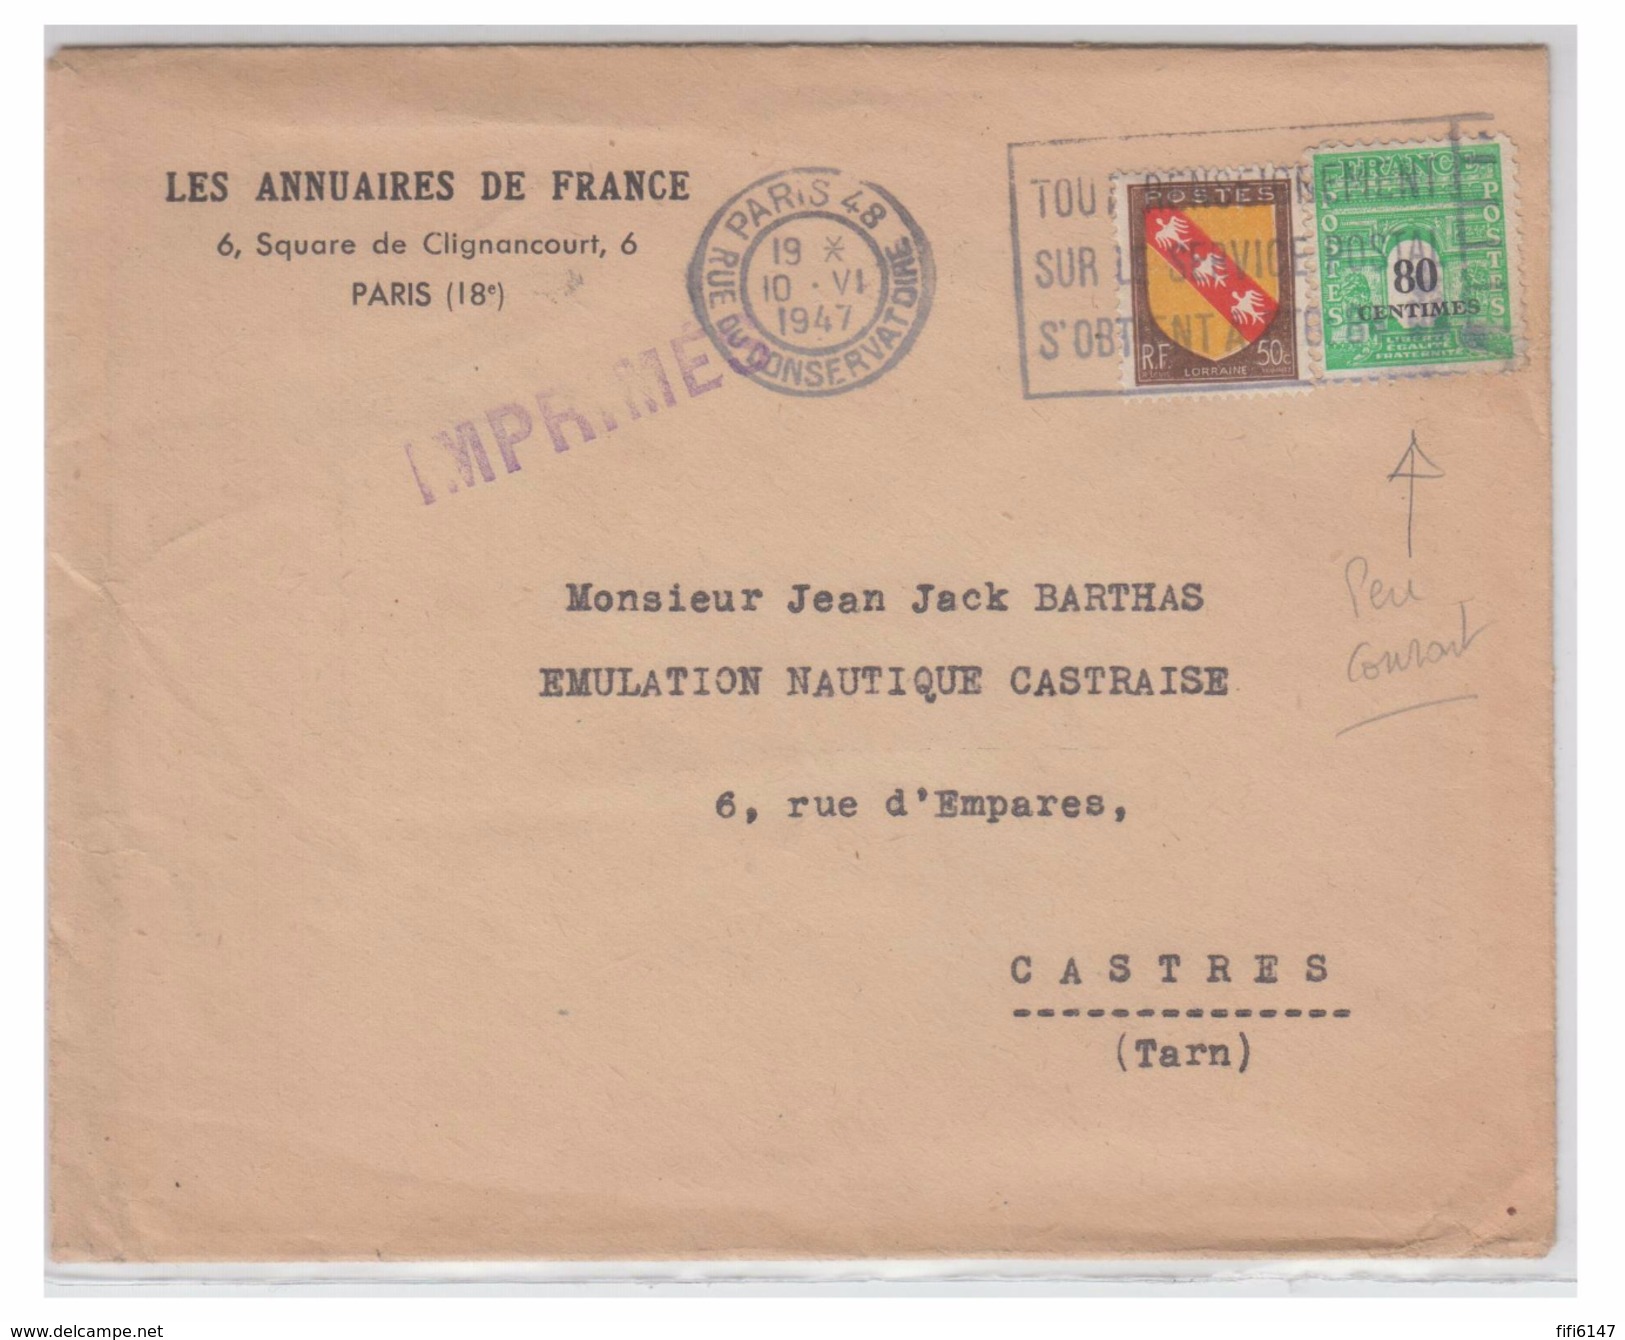 FRANCE -- 1947 -- TARIFS POSTAUX -- LETTRE AU TARIF IMPRIME -- N°706 80c ARC DE TRIOMPHE + N°757 - Tarifs Postaux